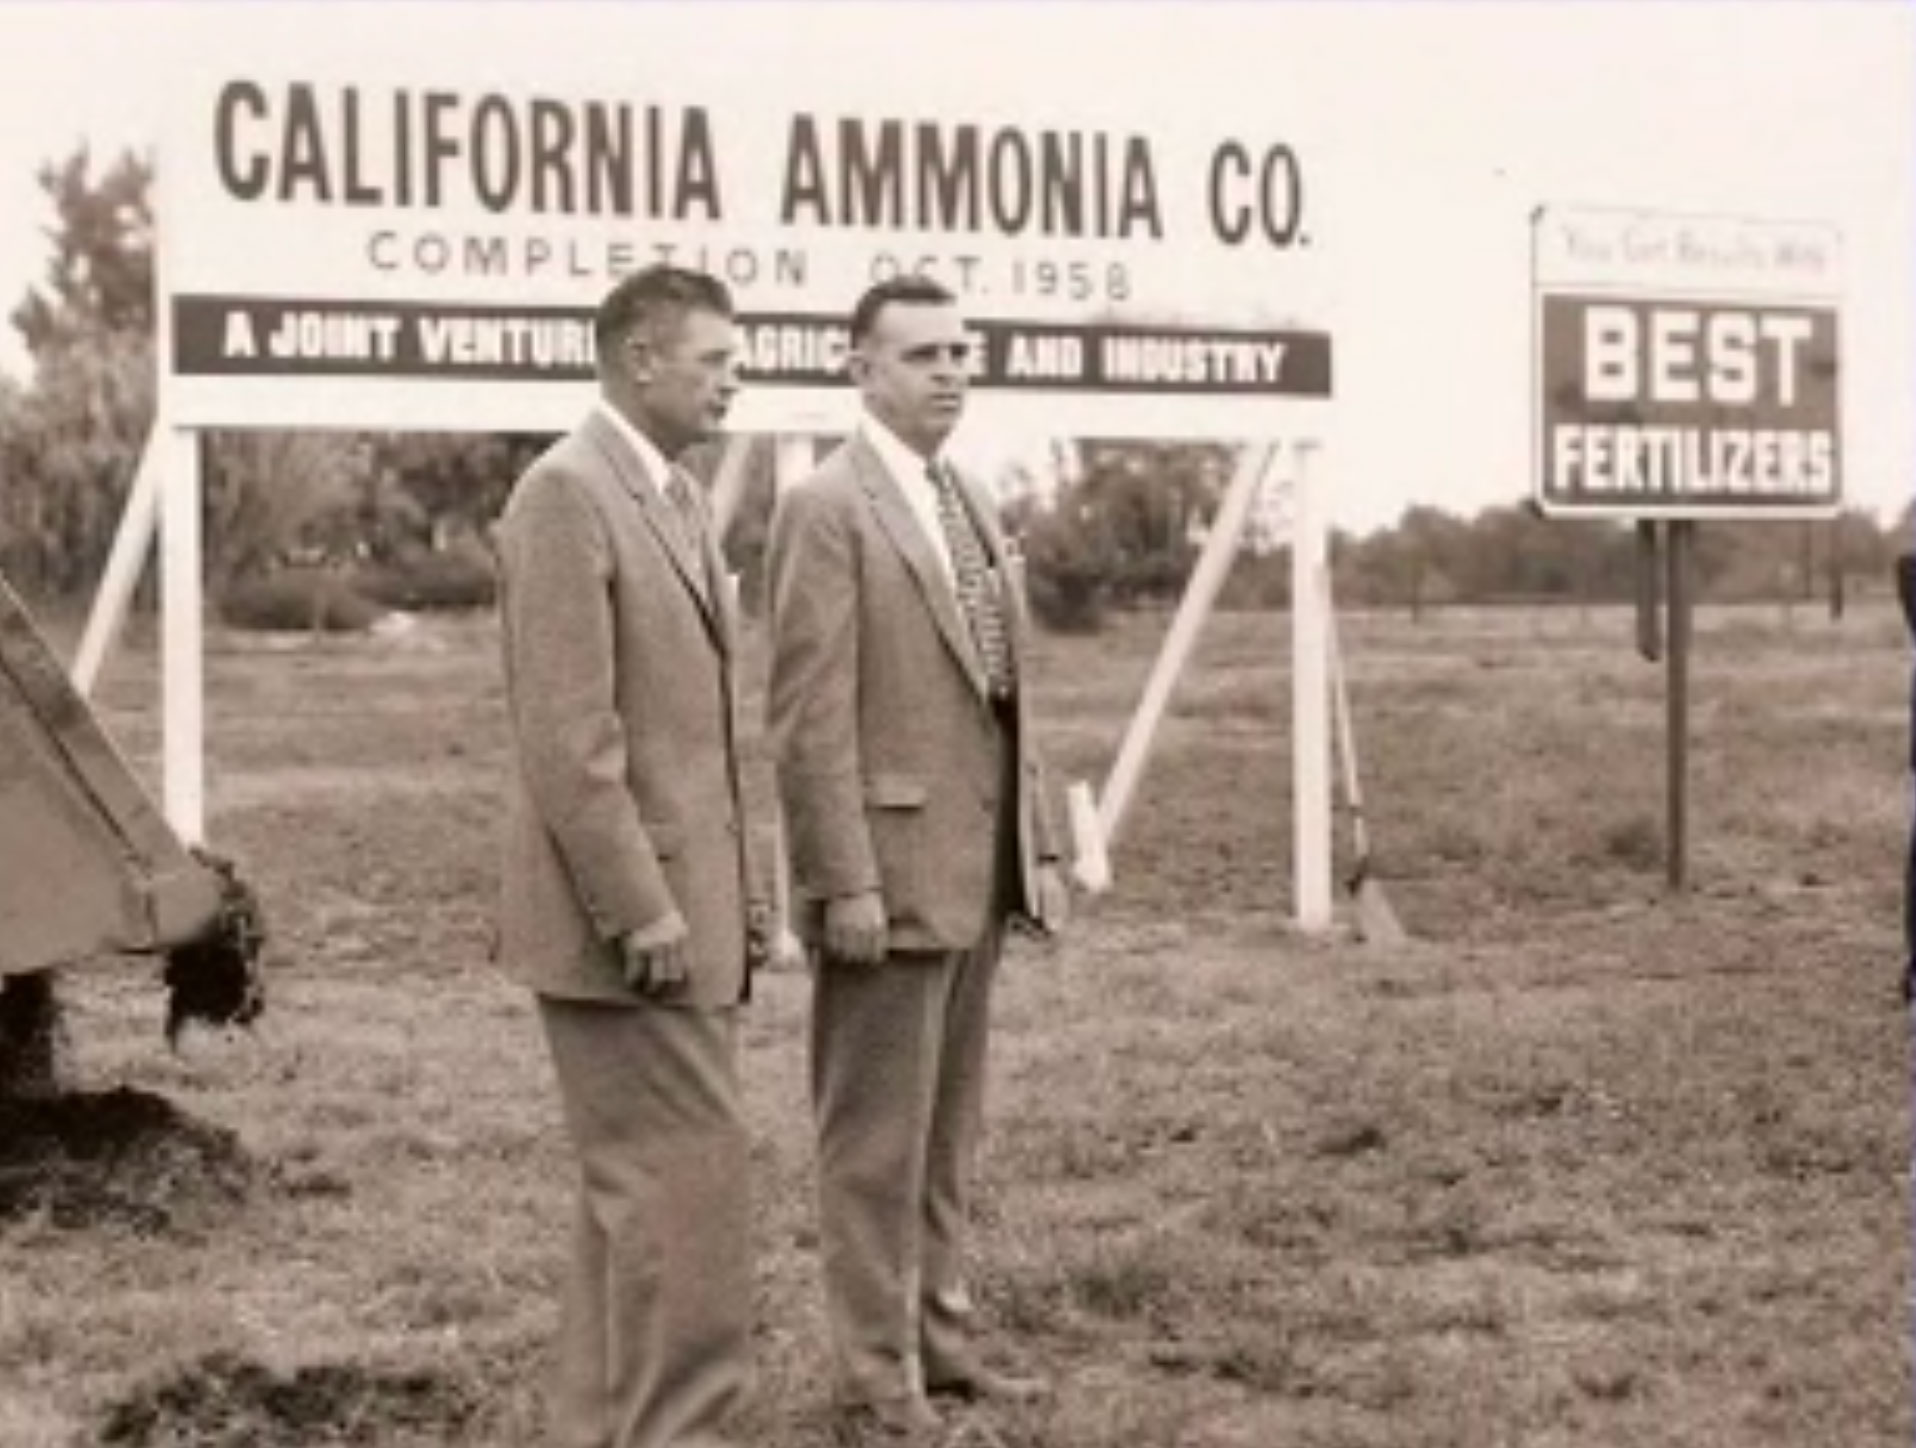 California Ammonia Co.